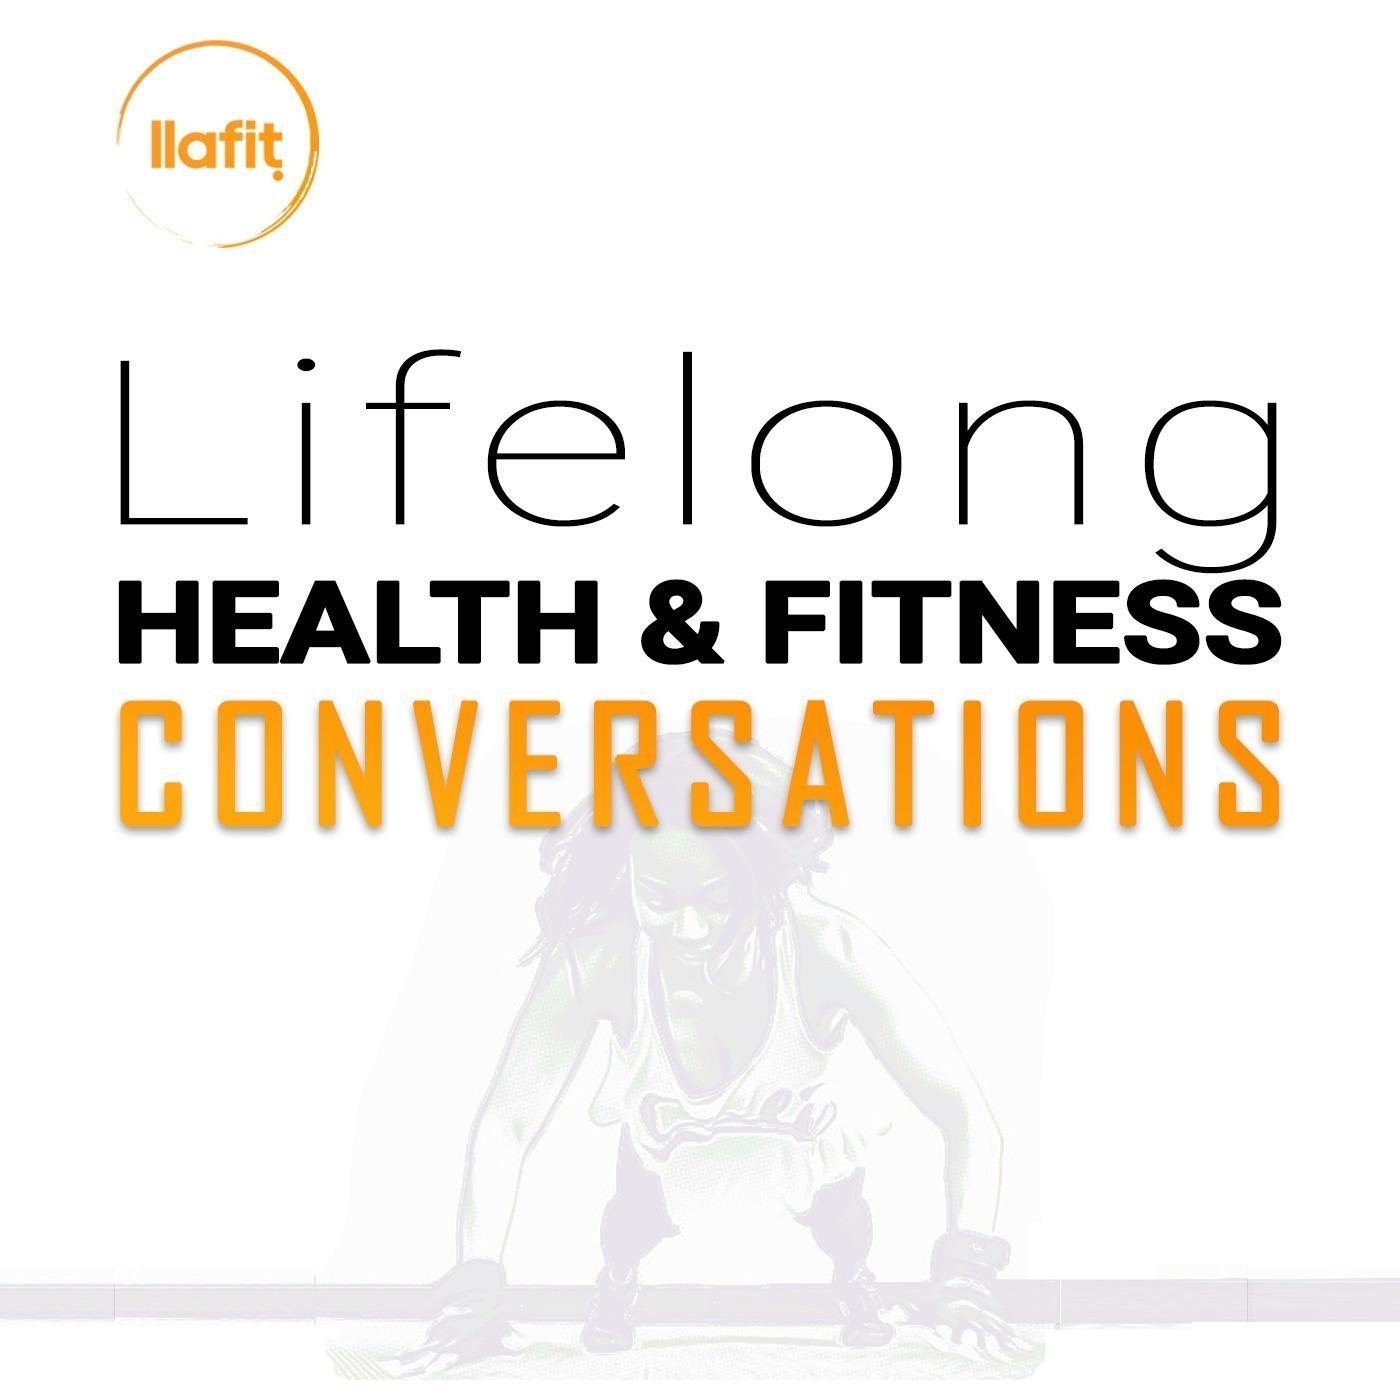 Lifelong Health & Fitness Conversations